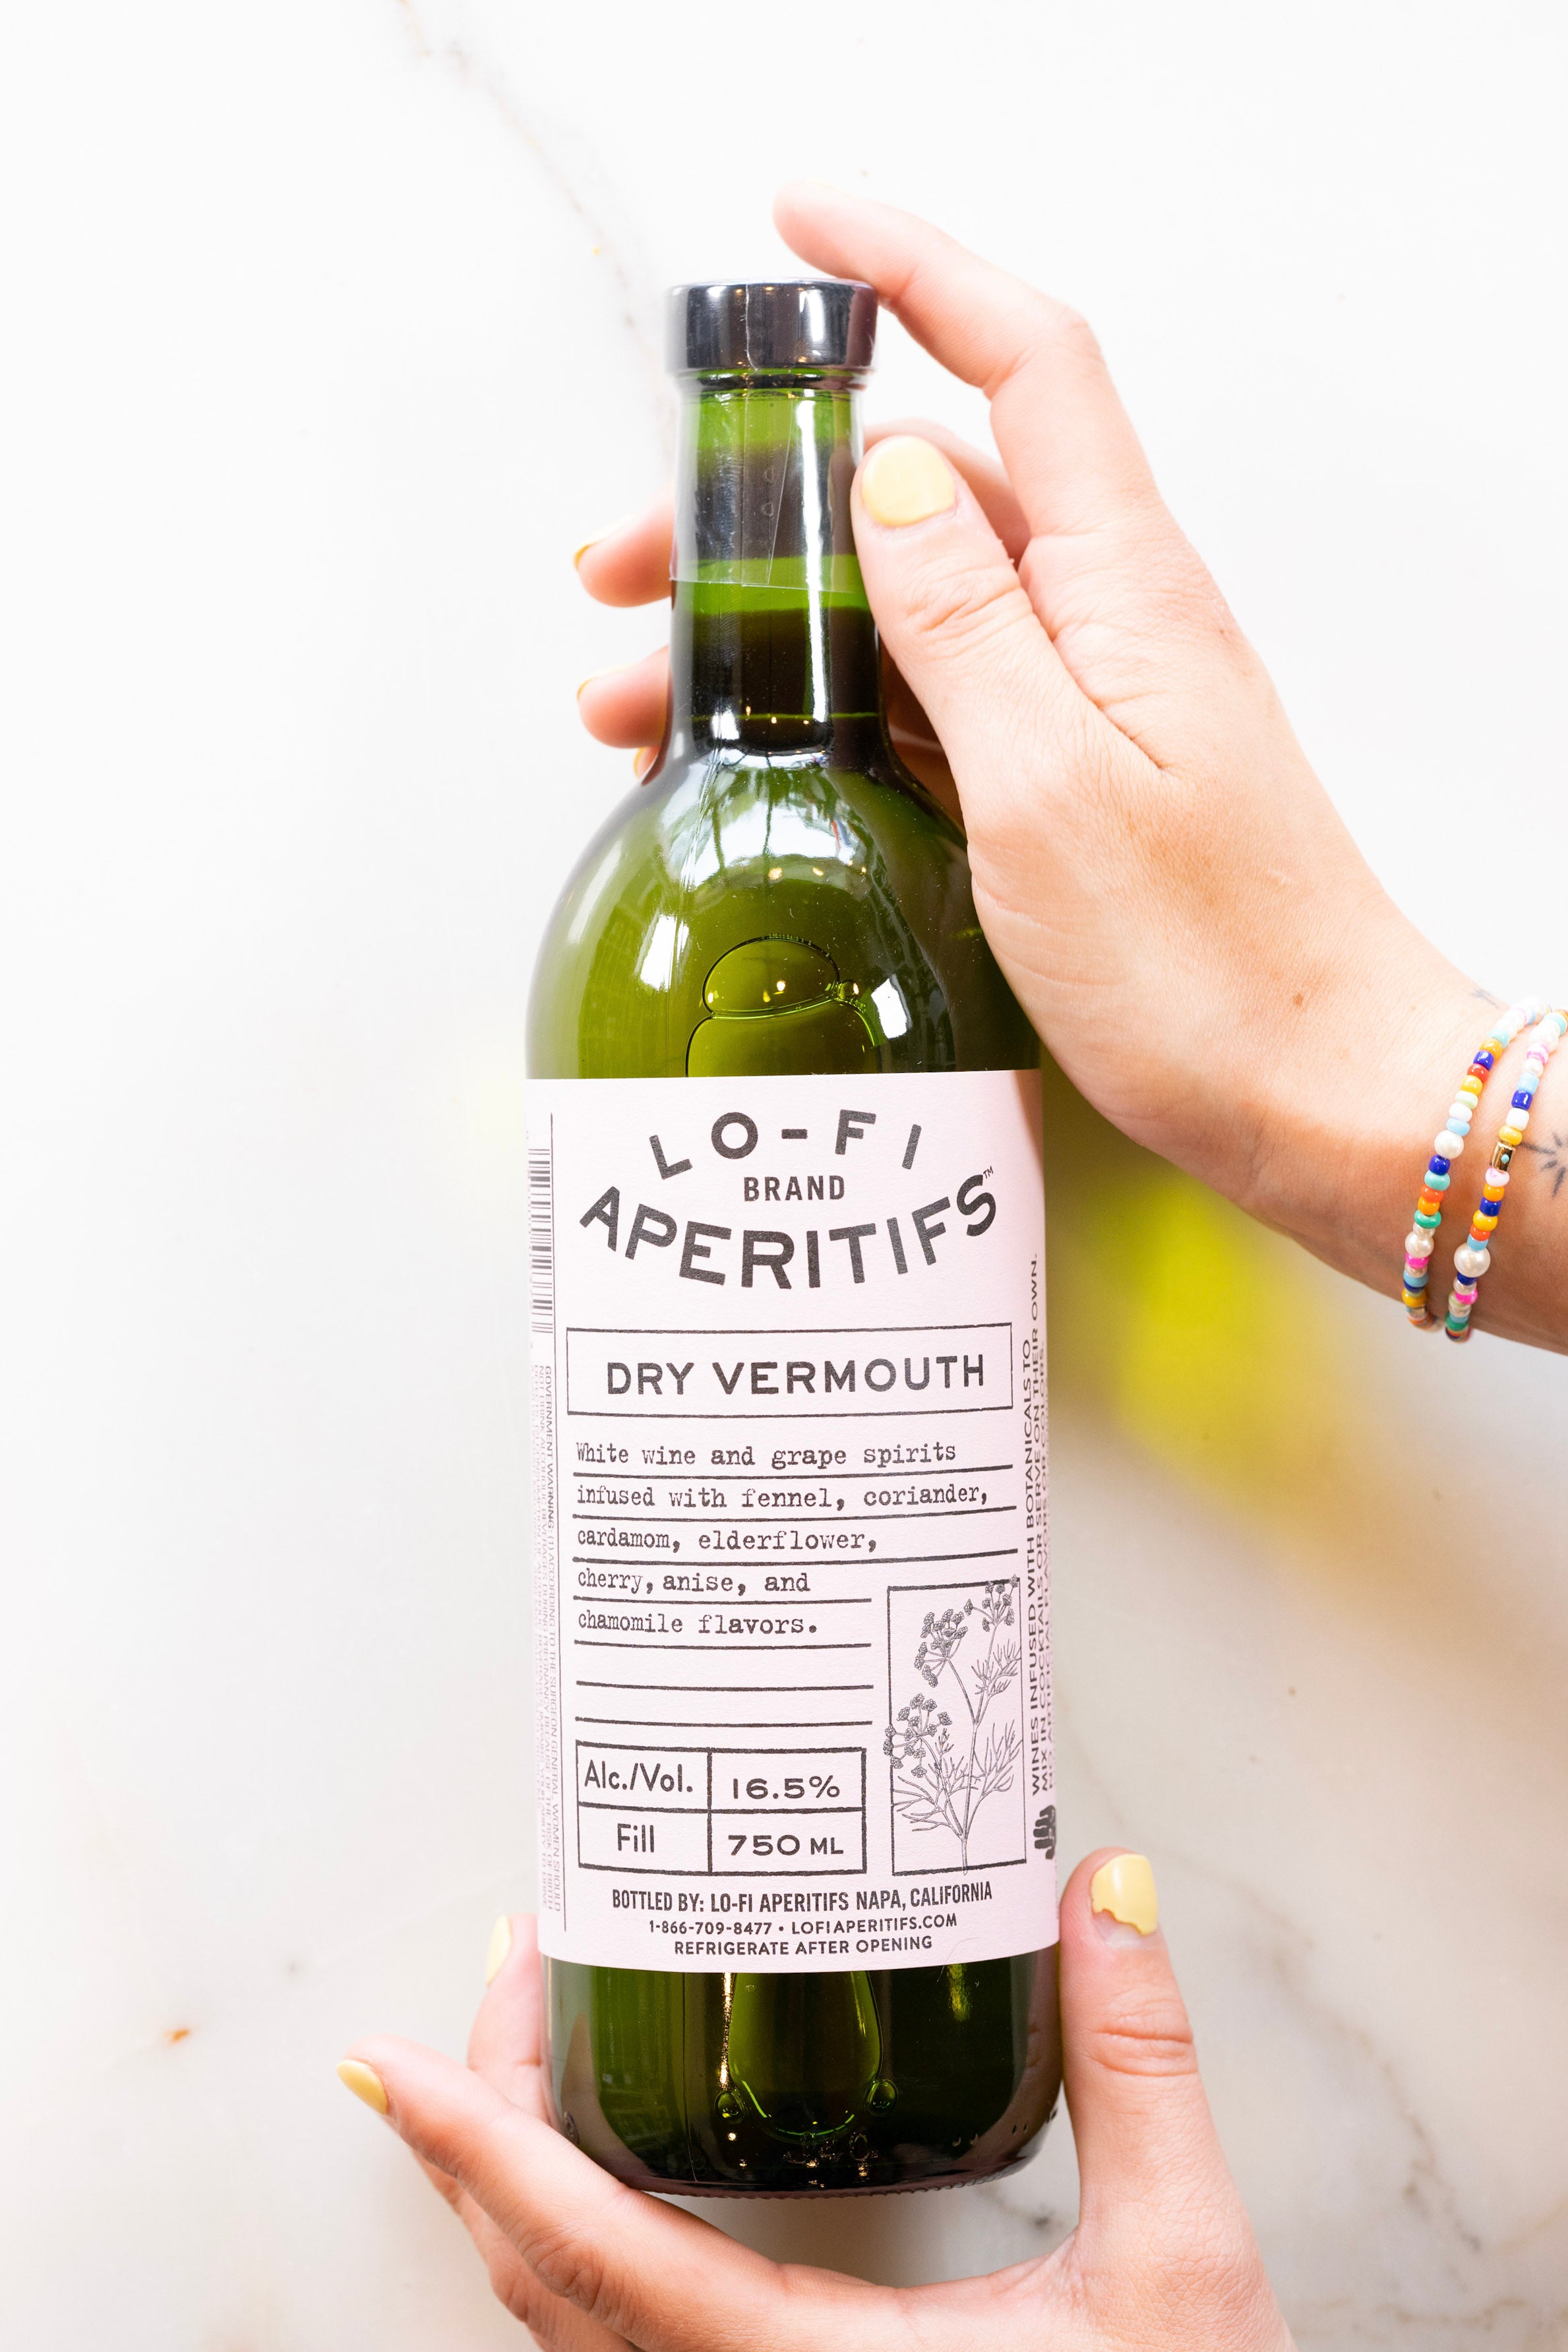 Lo-Fi Apertifs Dry Vermouth